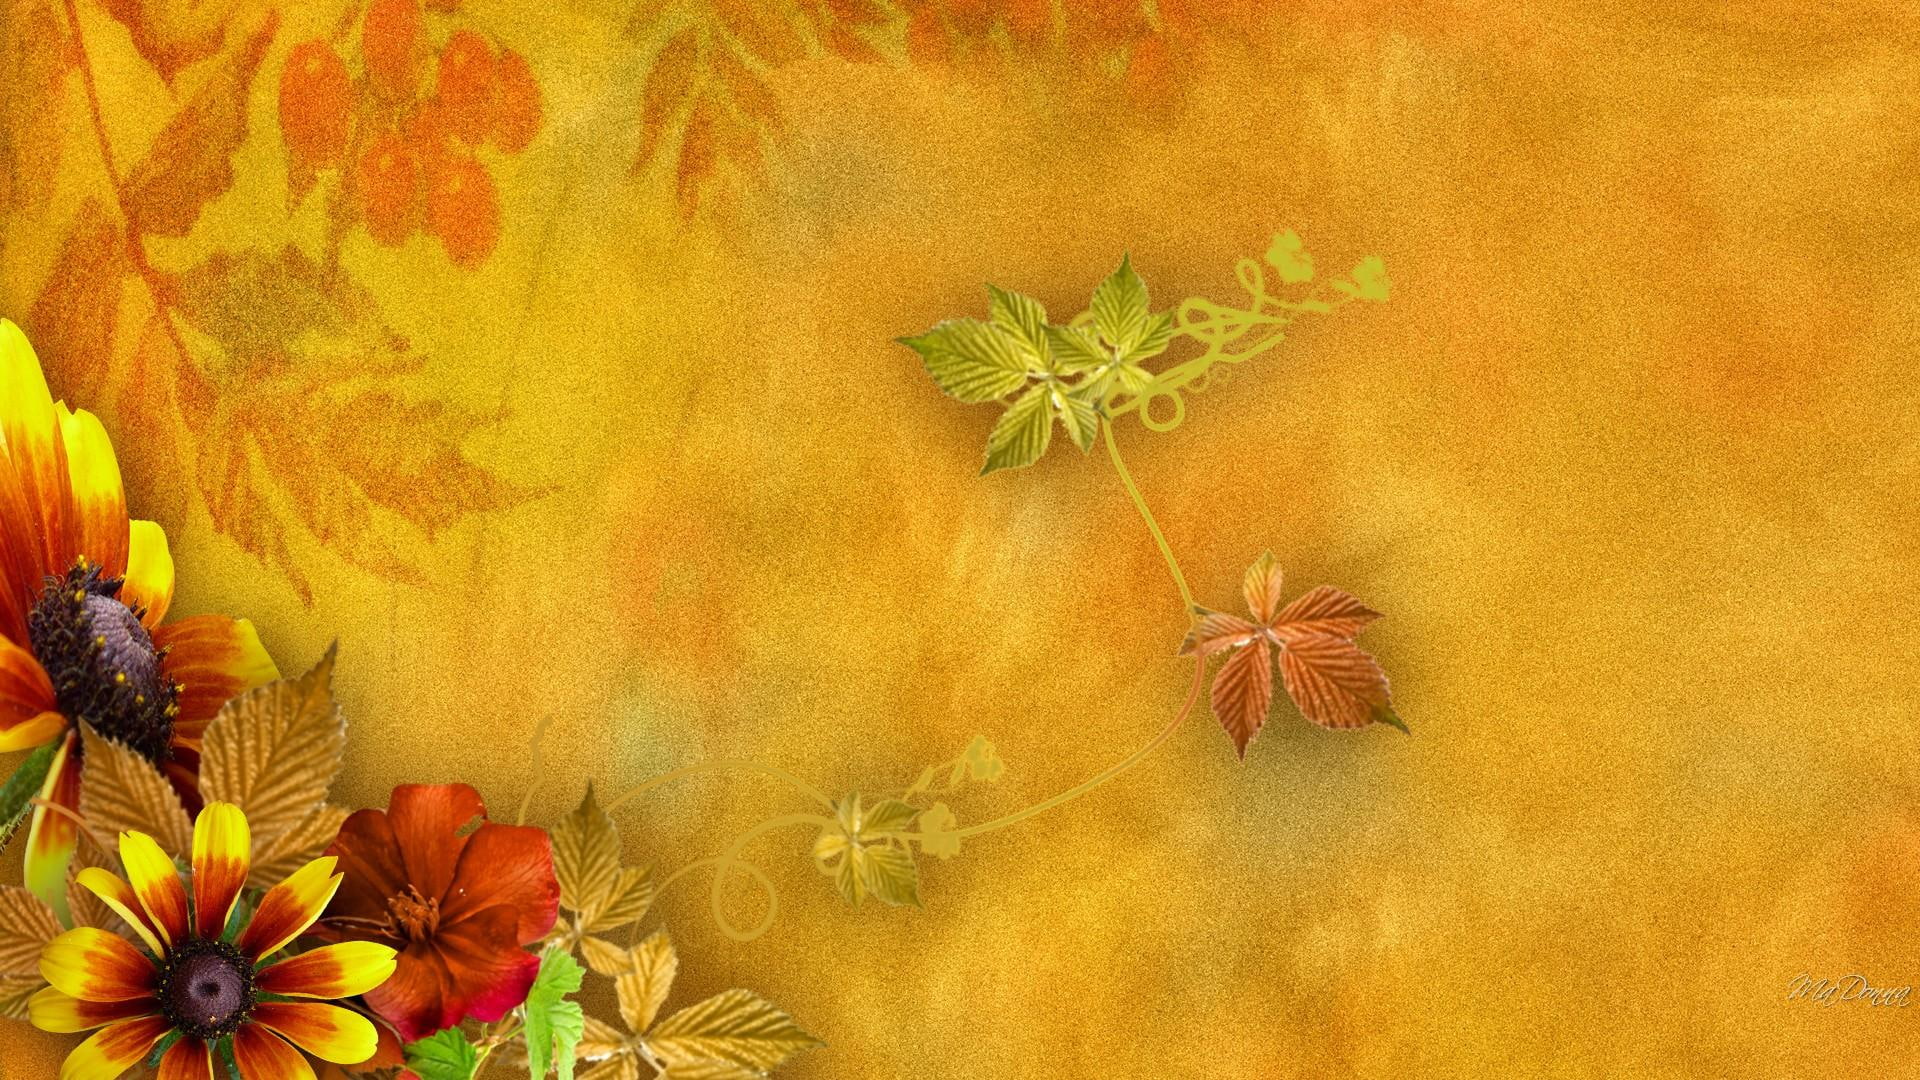 Fall So Fine, gold, autumn, orange, vines, leaves, flowers